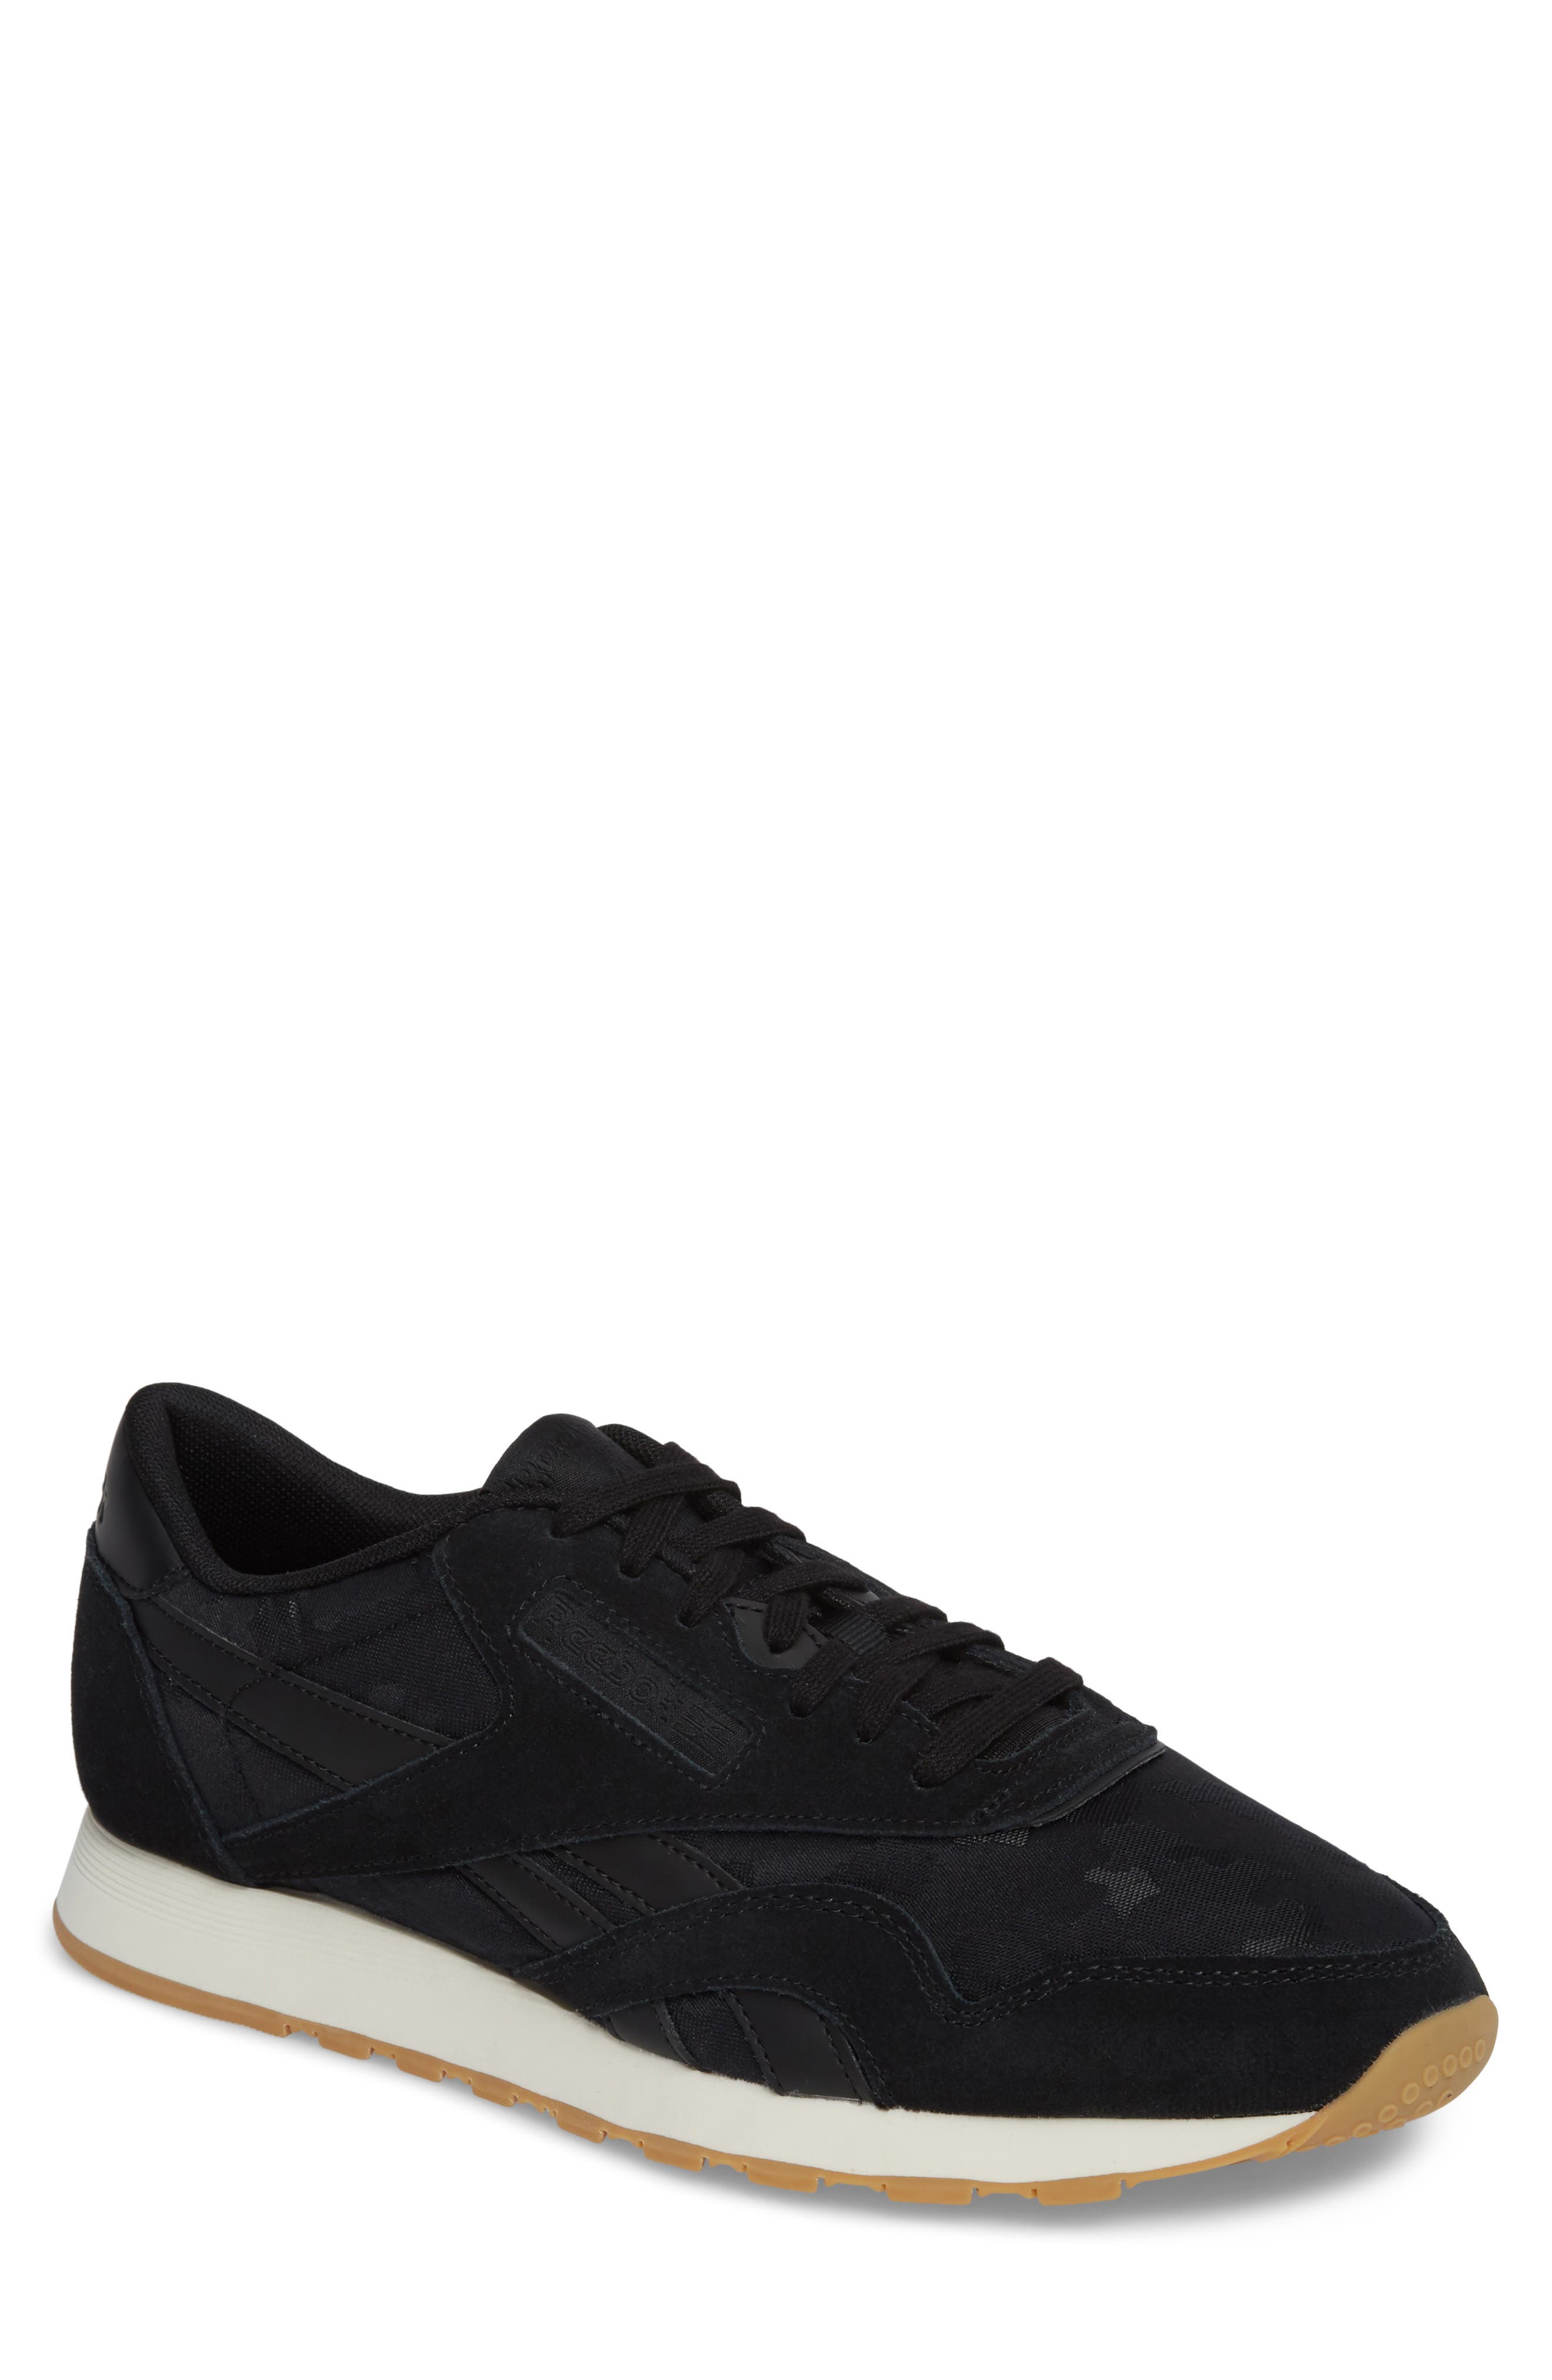 Reebok Classic Leather Nylon SG Sneaker 